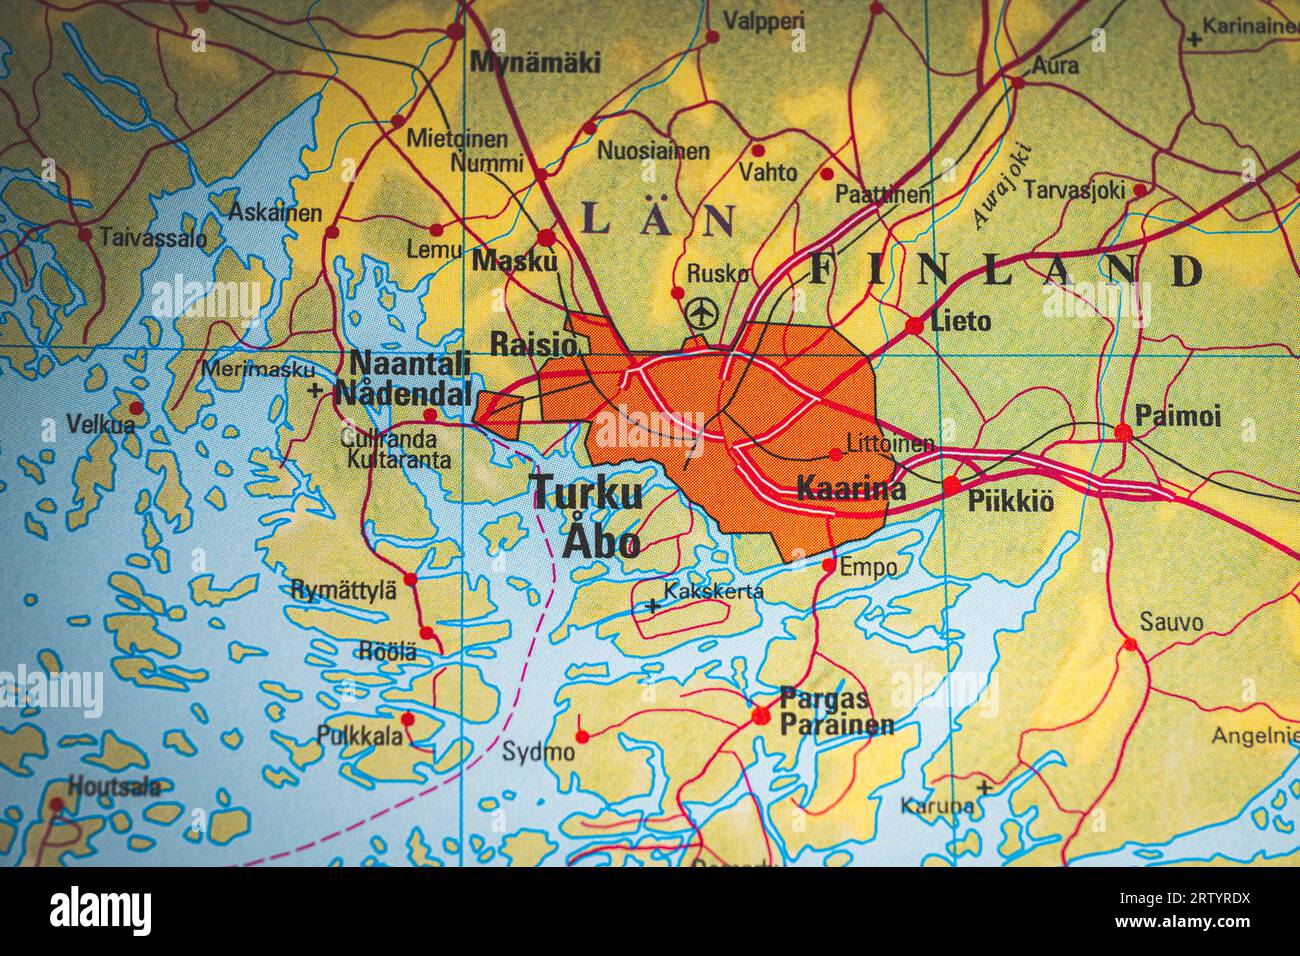 Atlas map of Turku in Finland Stock Photo